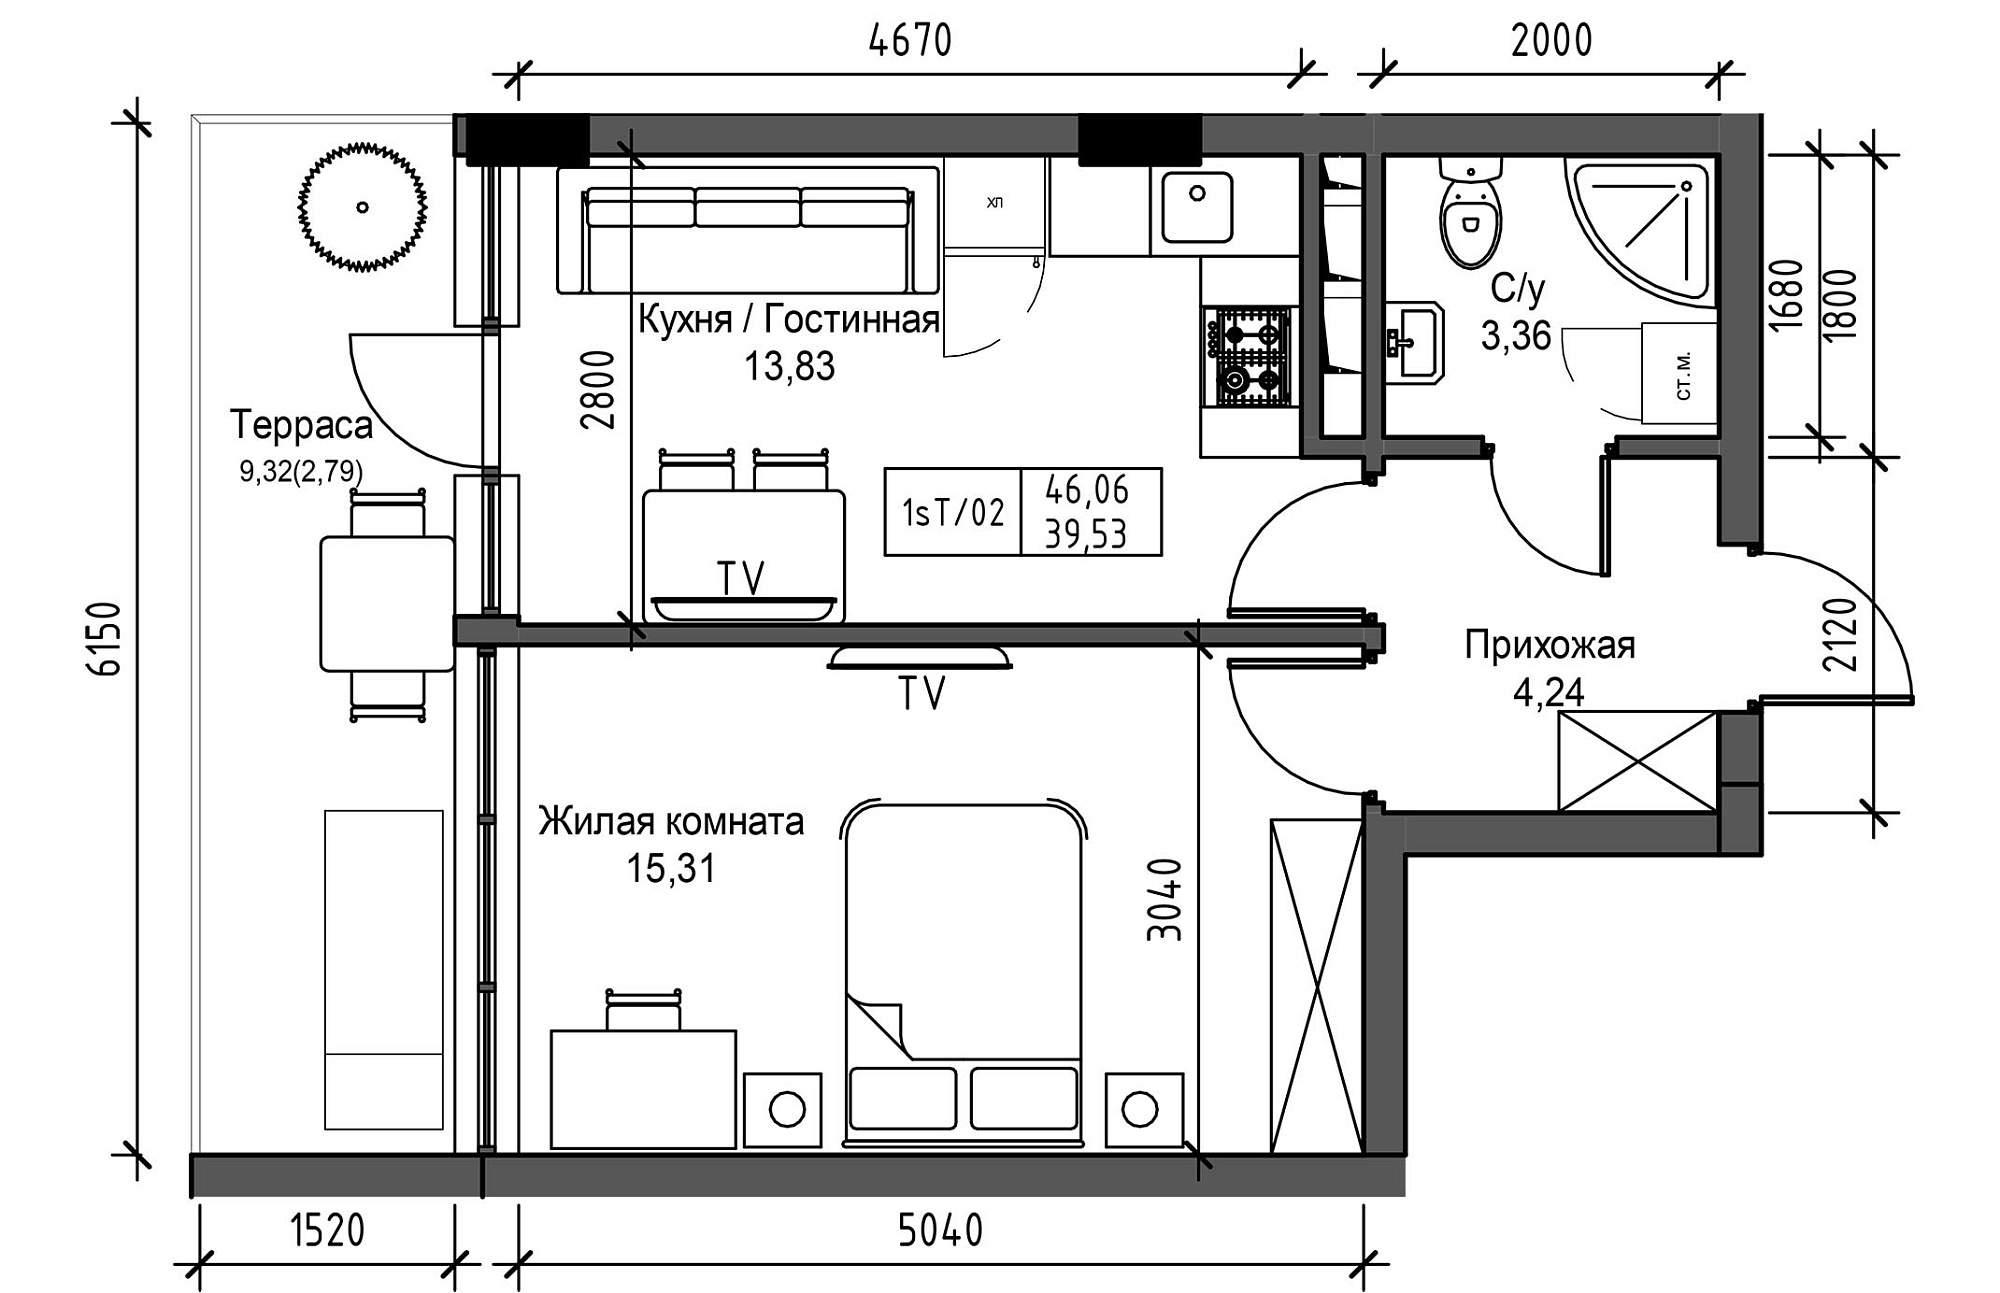 Planning 1-rm flats area 39.53m2, UM-003-05/0044.